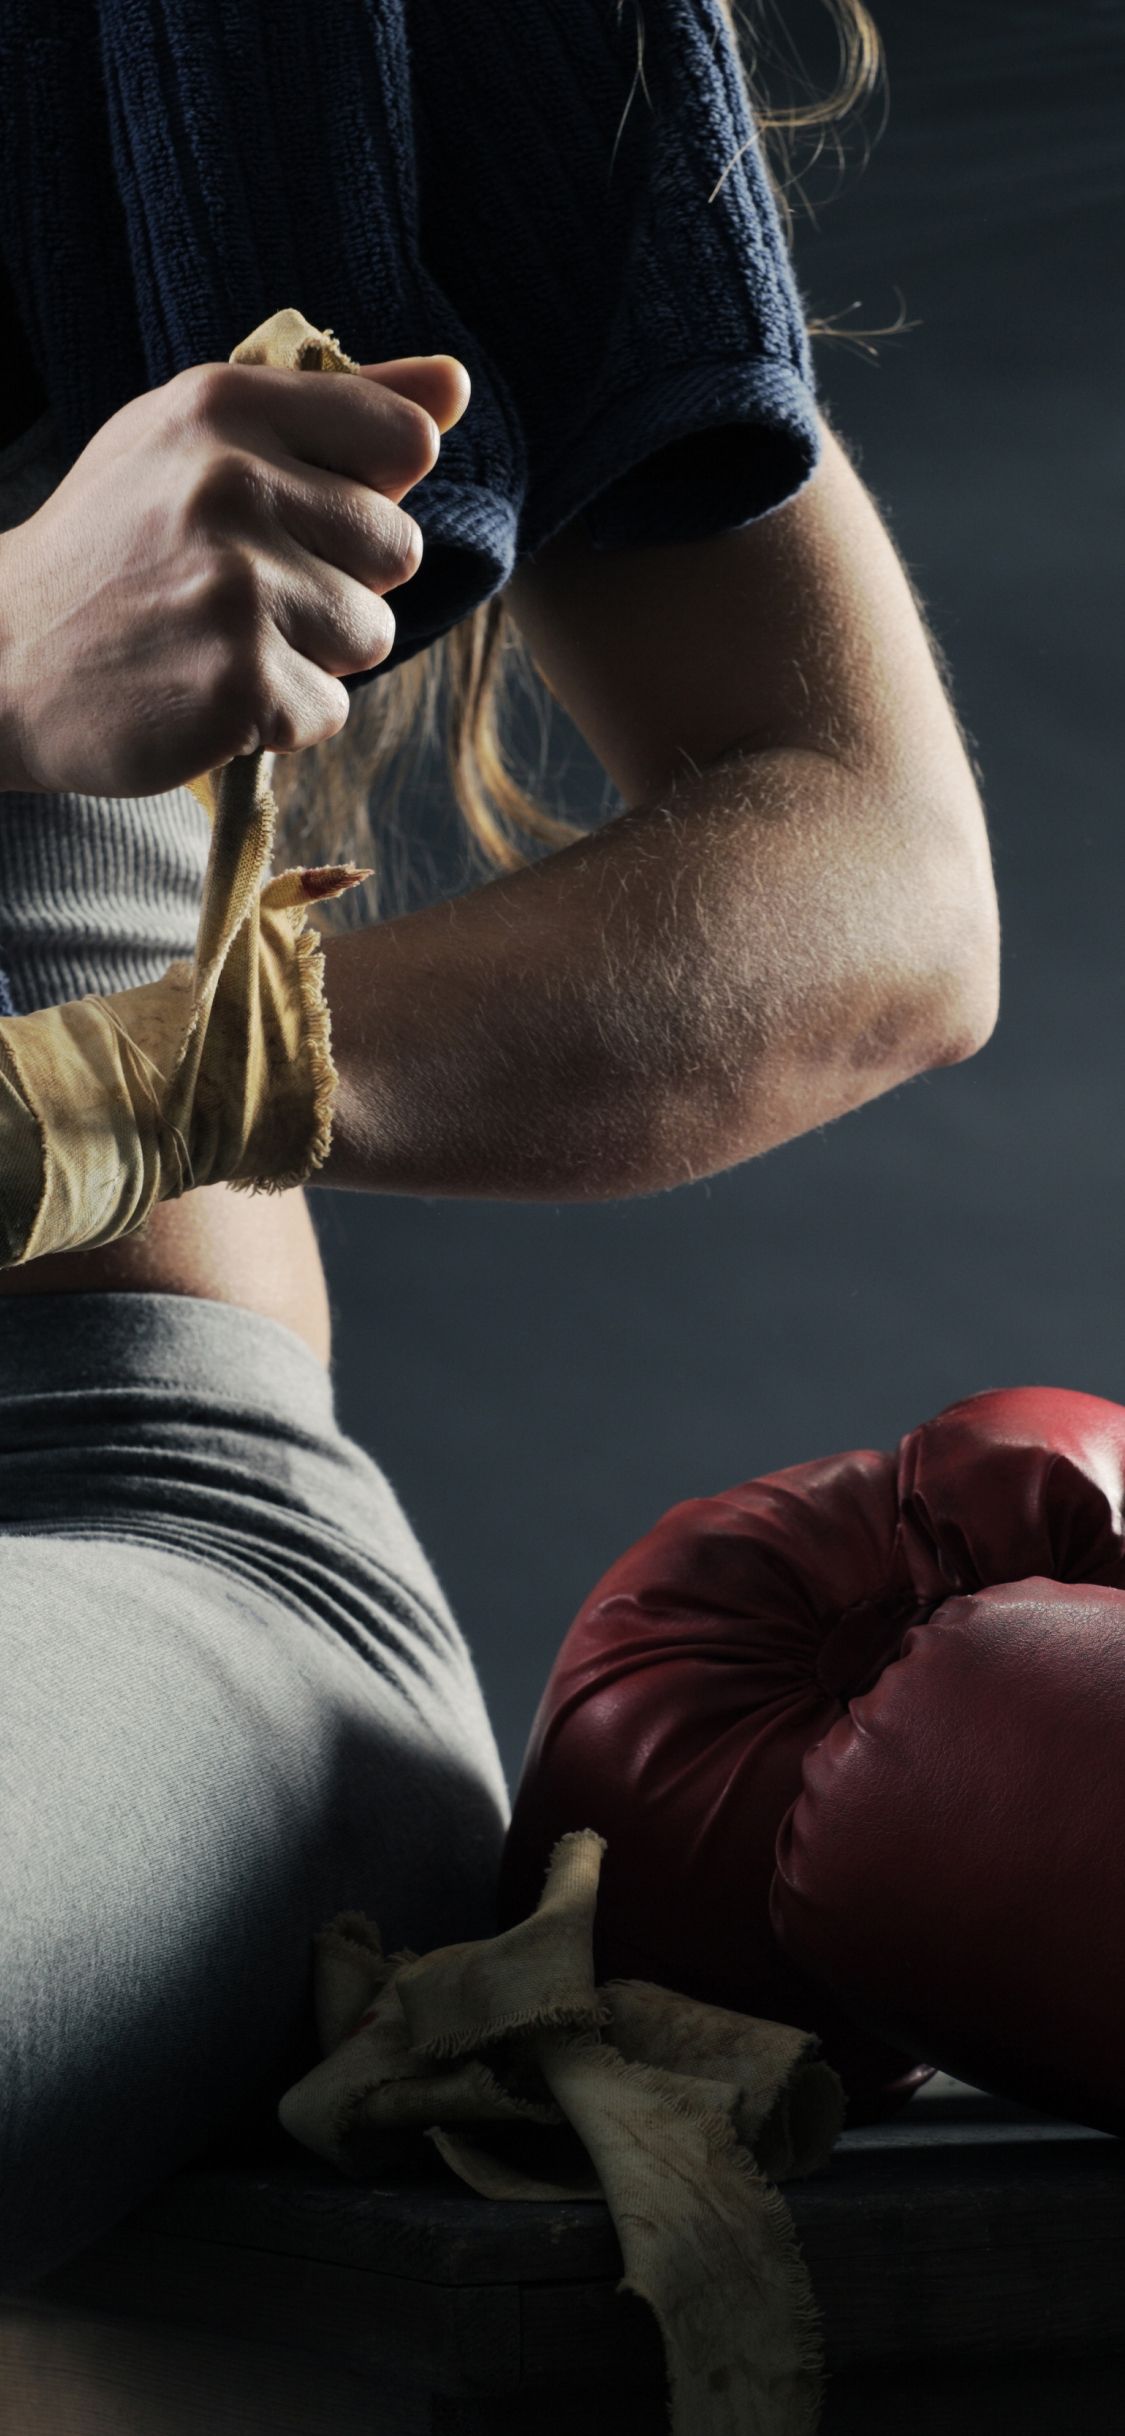 Free download Wallpaper sport girl boxing gloves wallpaper sports